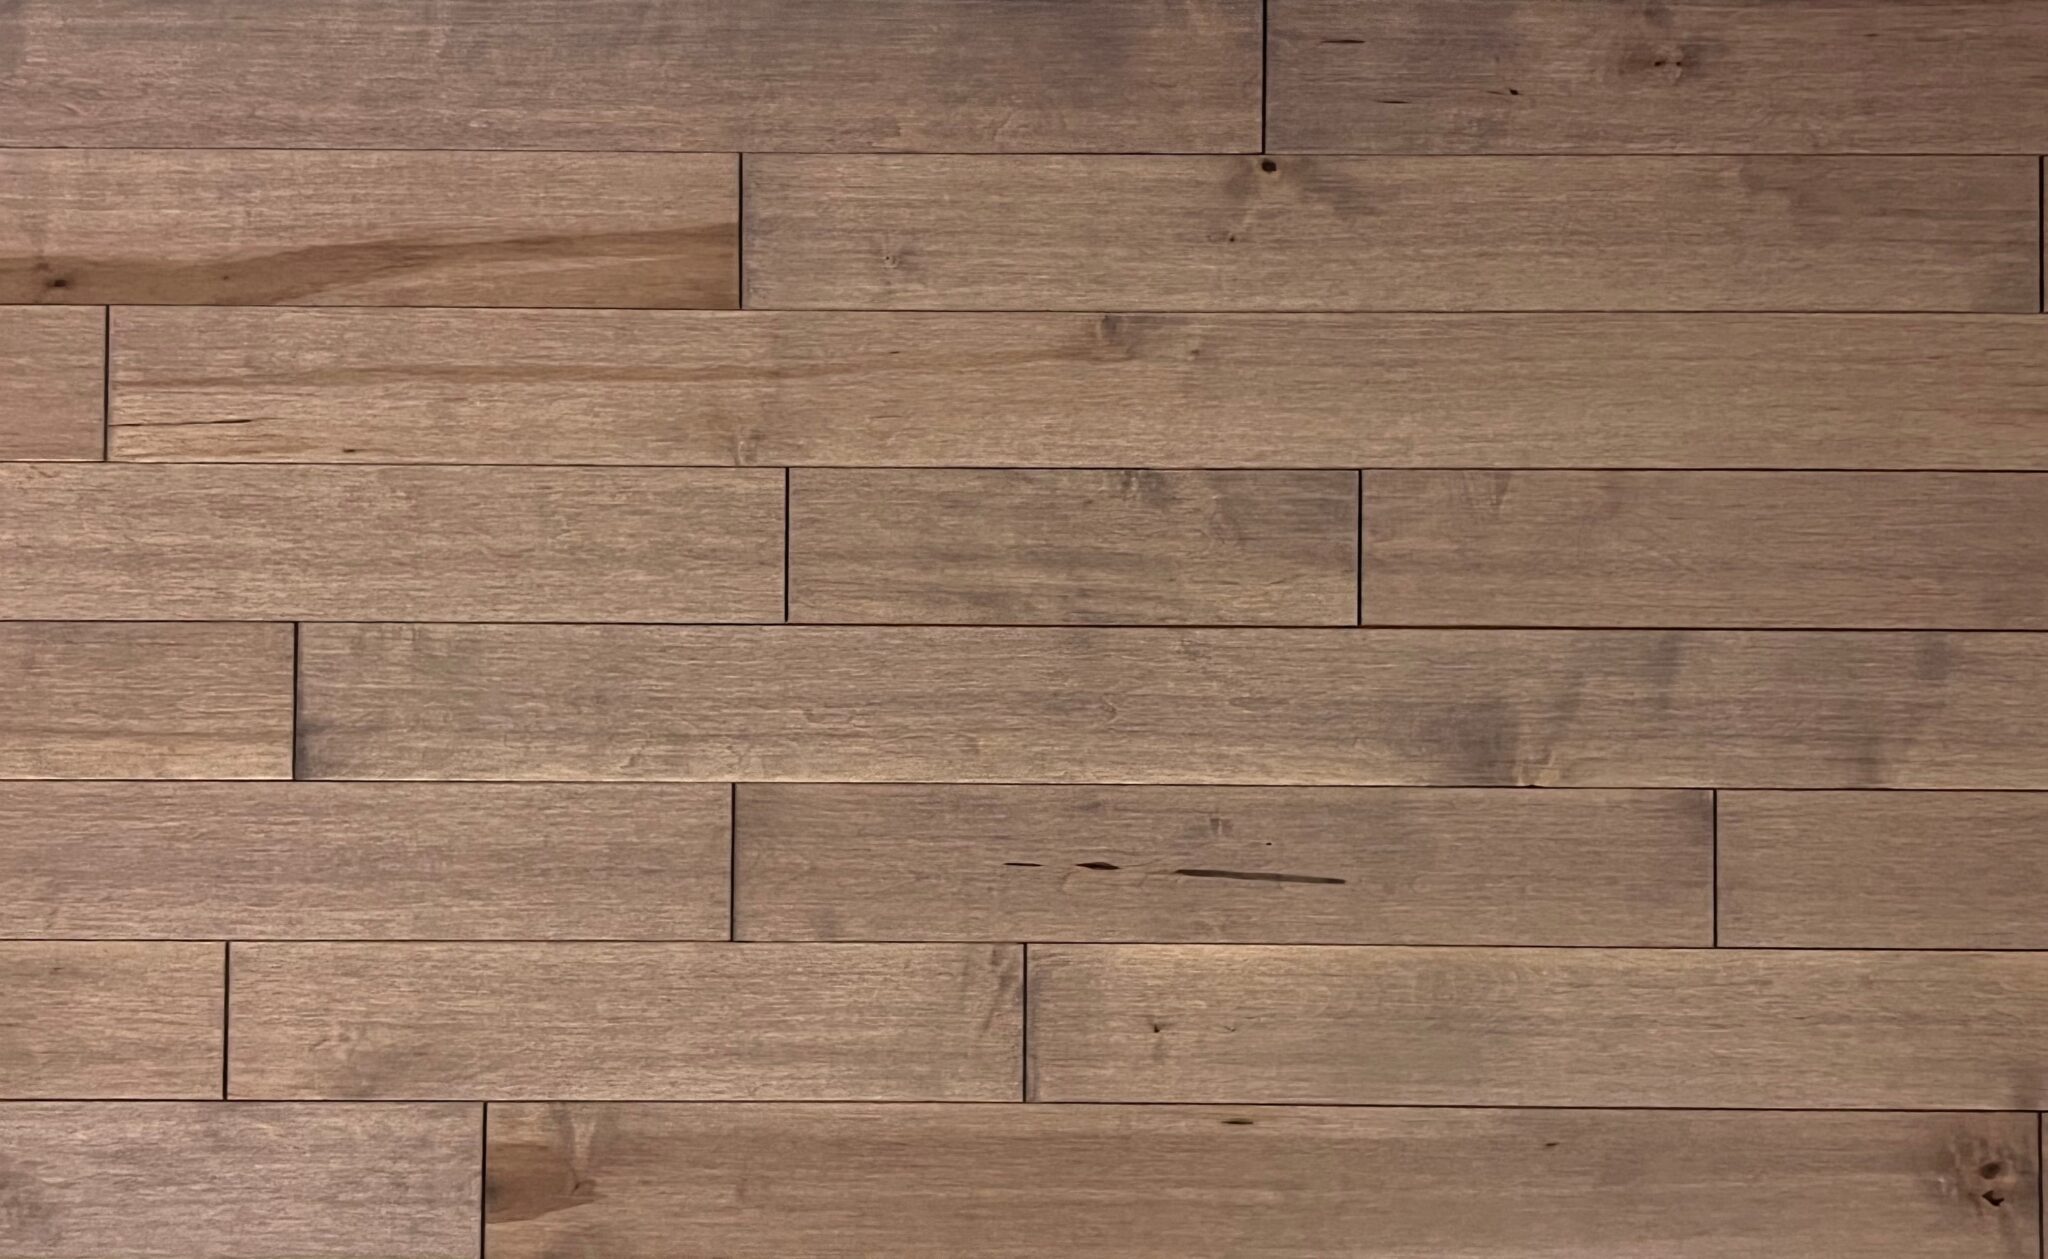 maple wood floor texture